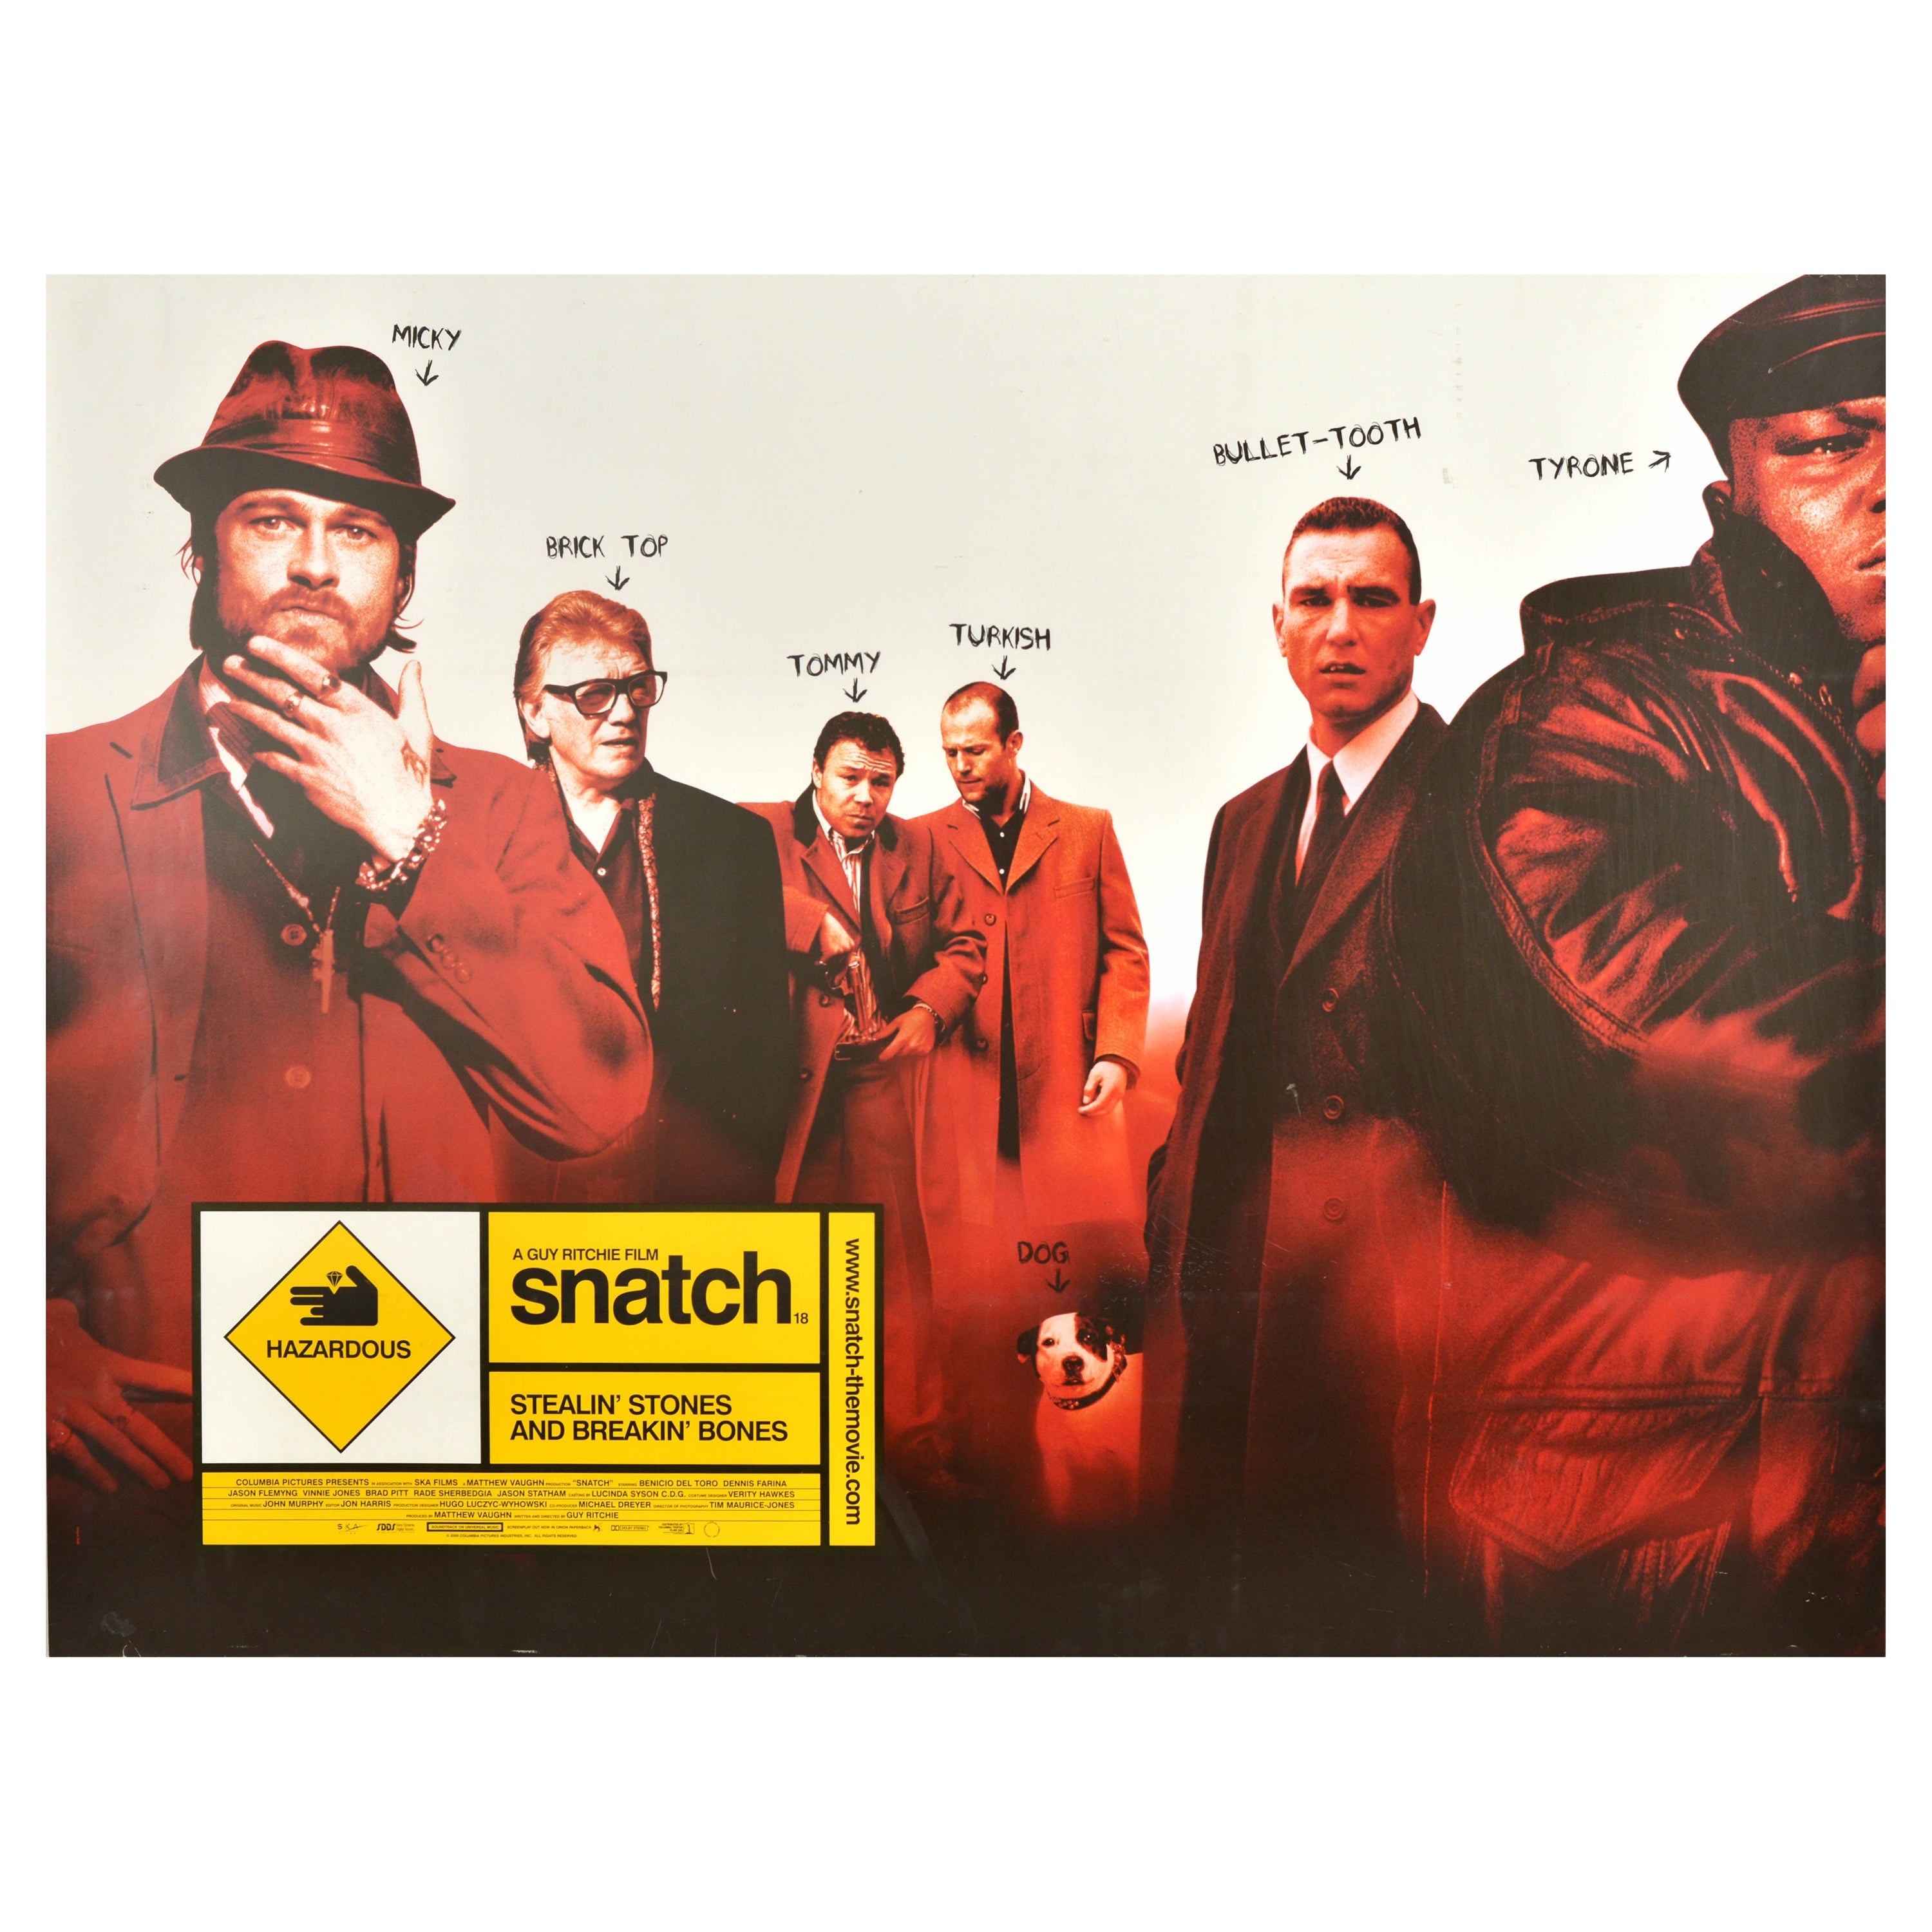 Original Vintage Film Poster For Snatch Crime Comedy Movie Guy Ritchie Brad Pitt